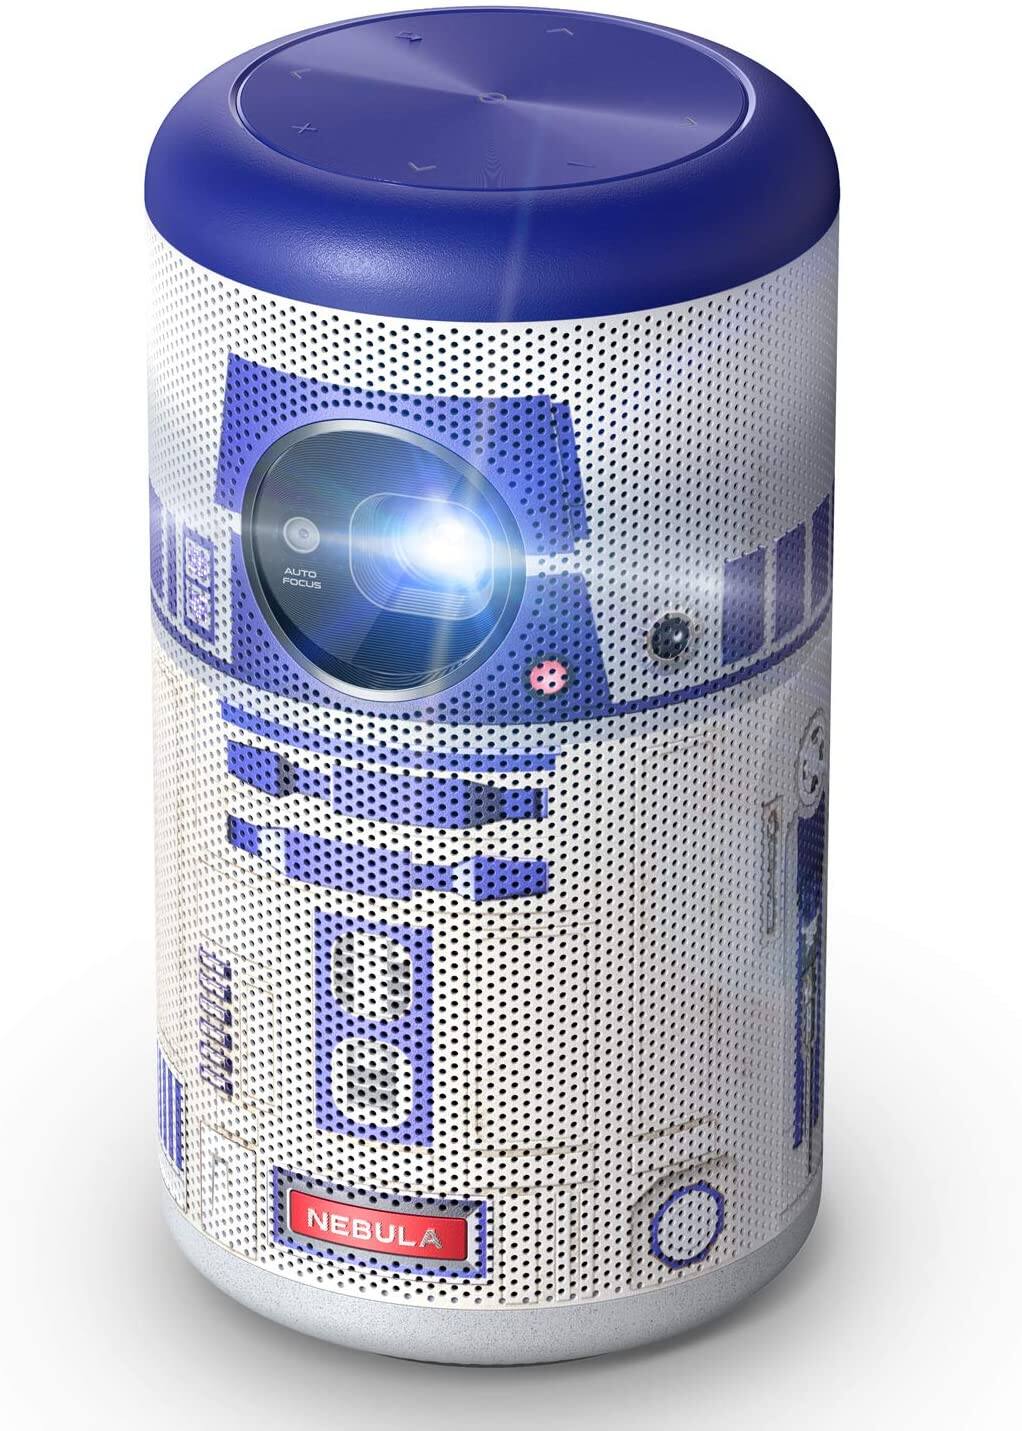 Anker Nebula Capsule II Star Wars R2-D2 Limited Edition Smart Mini Projector, 200 ANSI Lumen 720p DLP HD Portable Projector $459.99